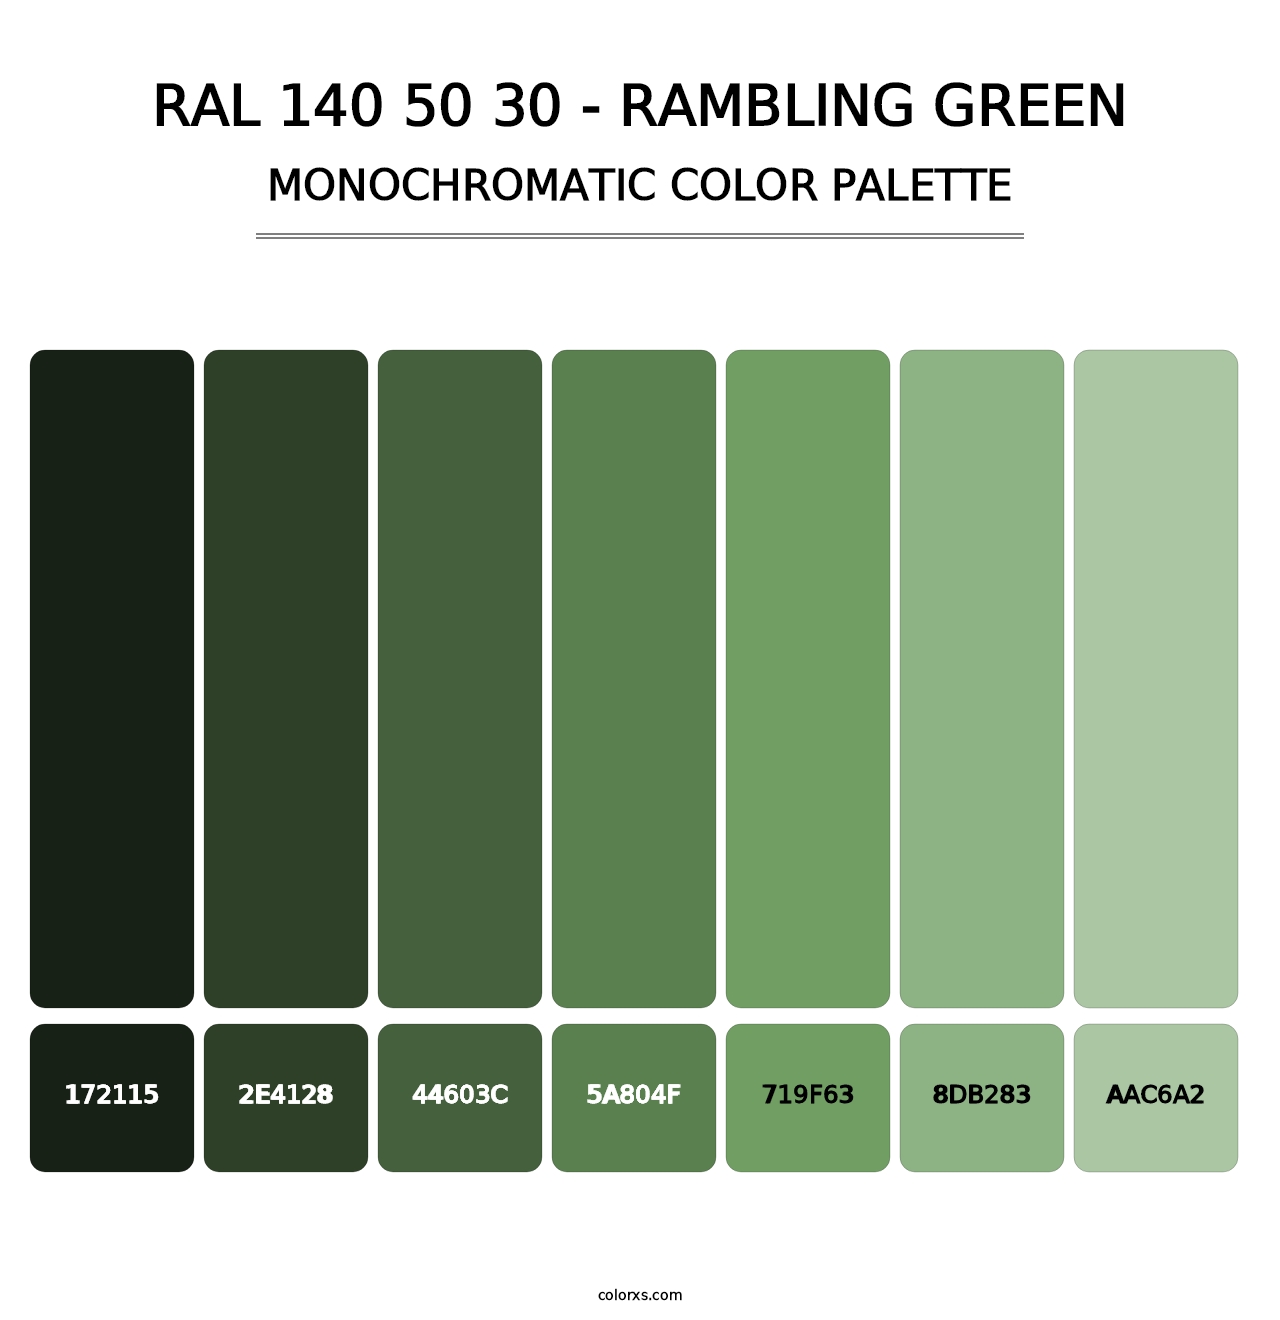 RAL 140 50 30 - Rambling Green - Monochromatic Color Palette